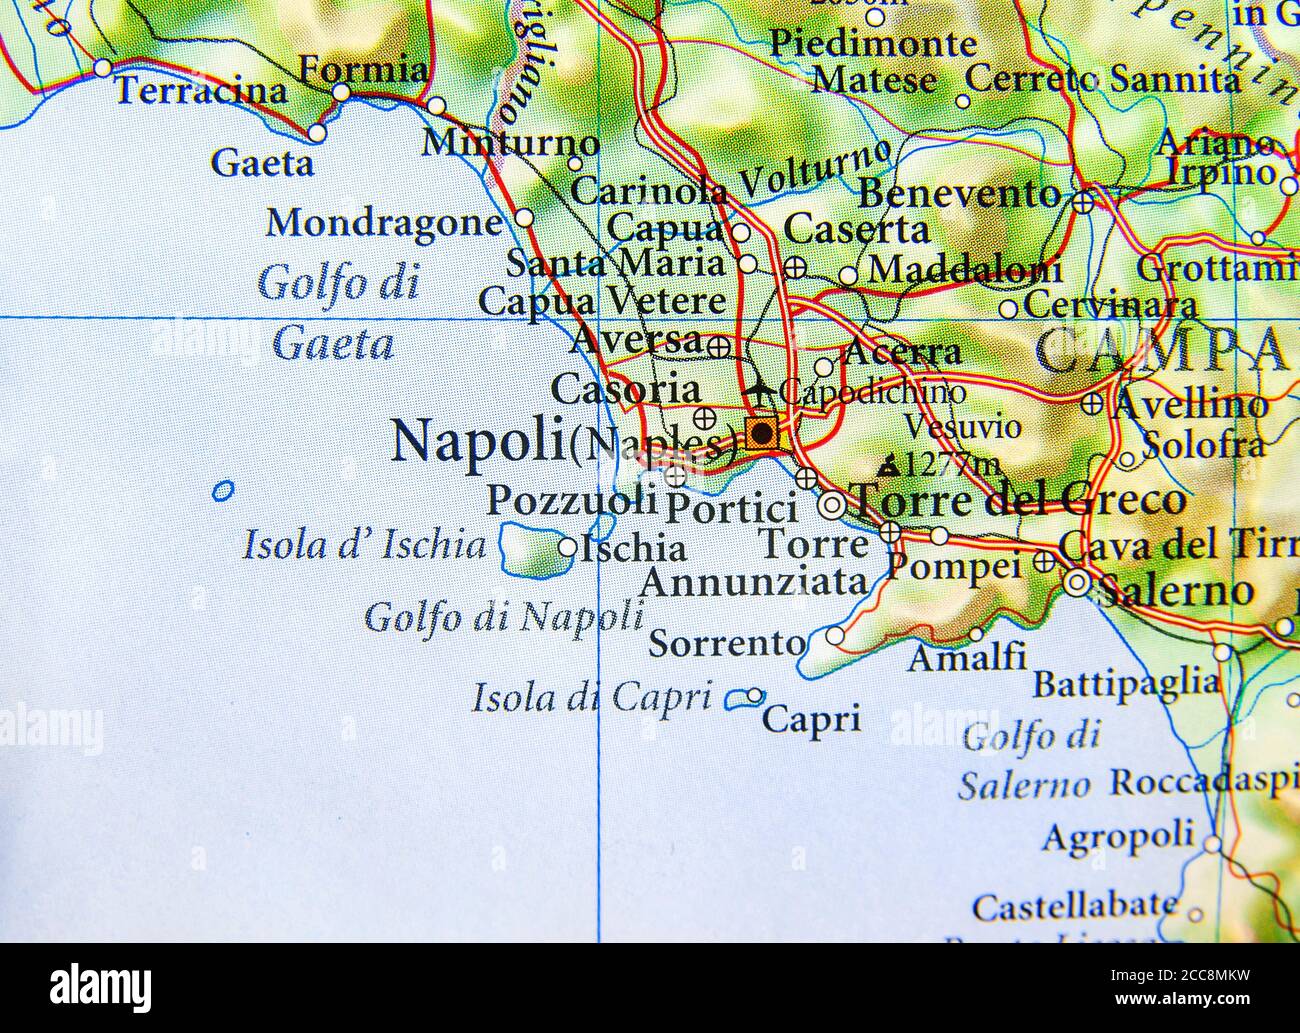 Napoli On Italy Map - Naples On Map Napoli On Map Campania Italy